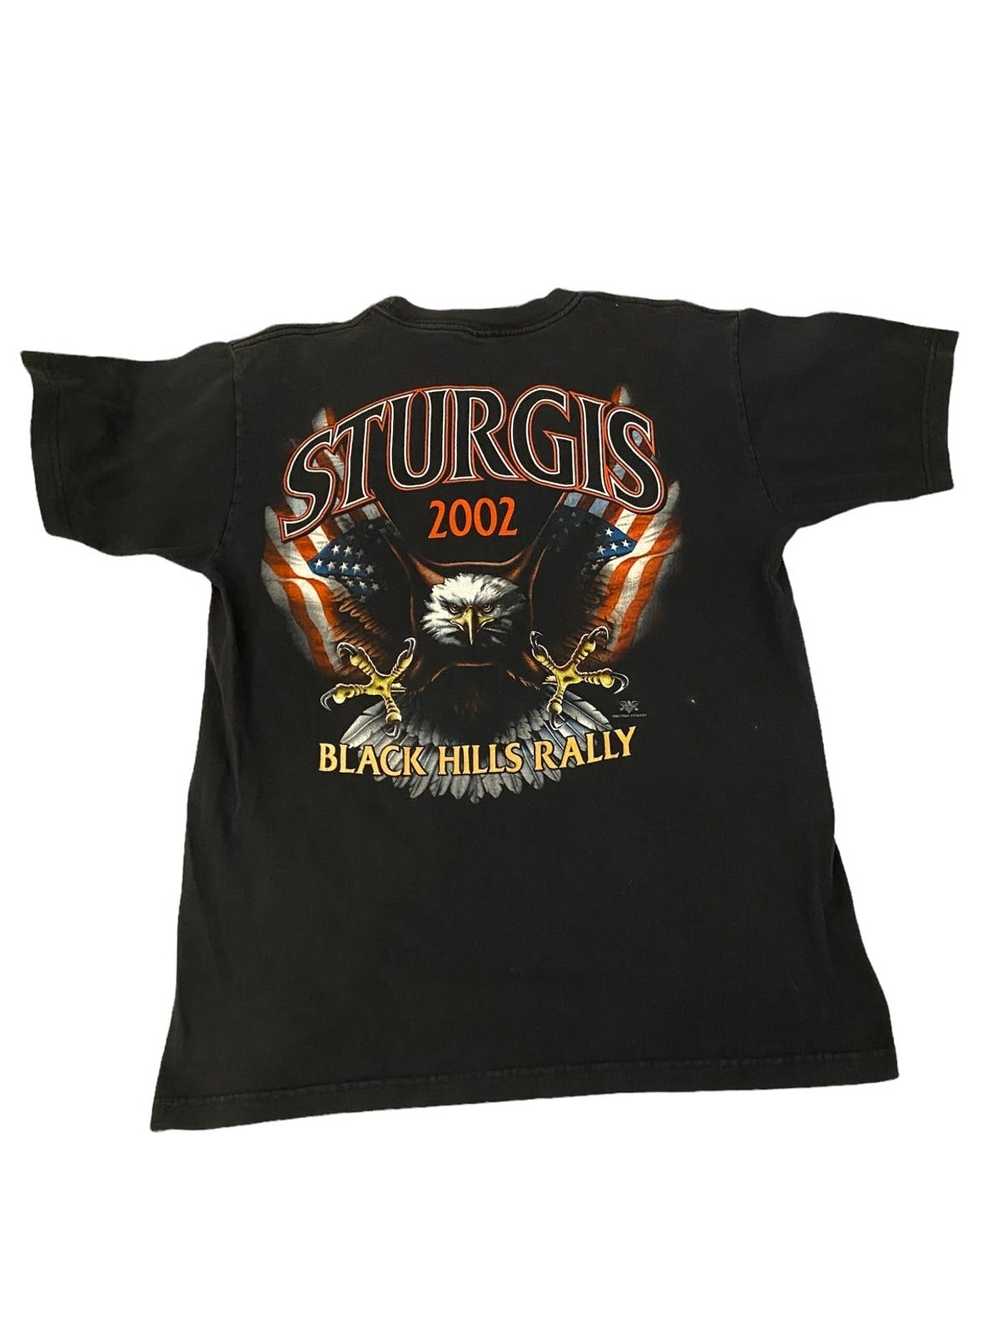 Vintage Vintage 2002 Sturgis Motorcycle Shirt - image 2